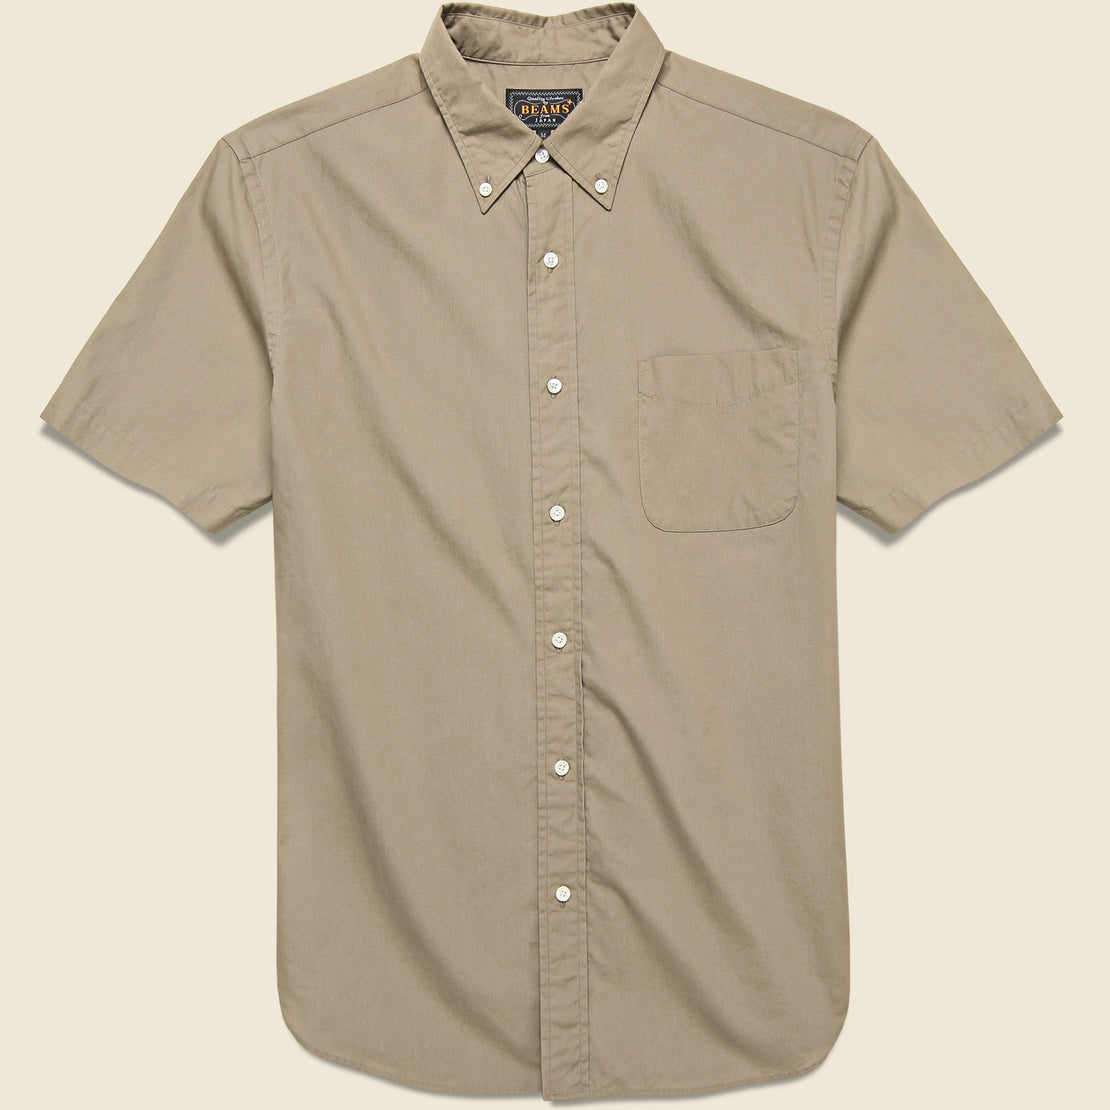 BEAMS+ Short Sleeve Broad Cloth Shirt - Beige